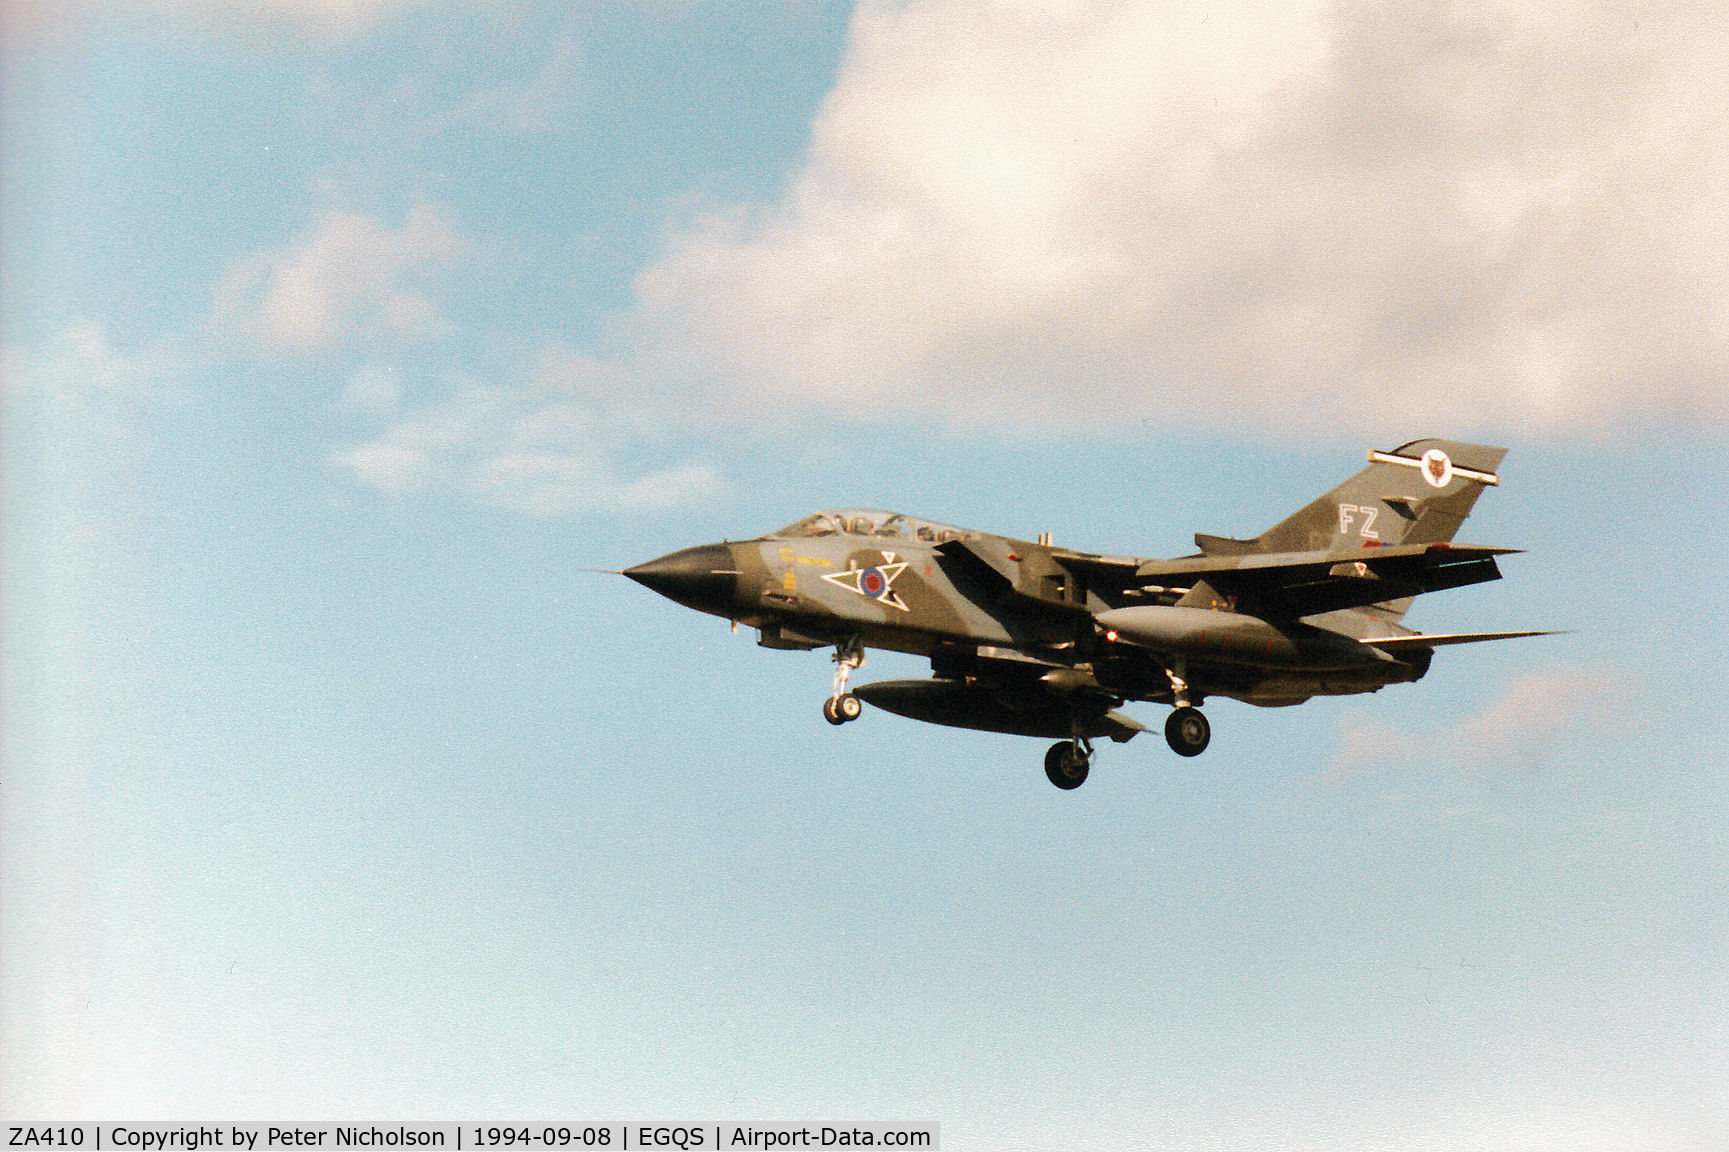 ZA410, 1983 Panavia Tornado GR.1 C/N 227/BT034/3109, Tornado GR.1, callsign Mentor, of 15(Reserve) Squadron on finals for Runway 23 at RAF Lossiemouth in September 1994.